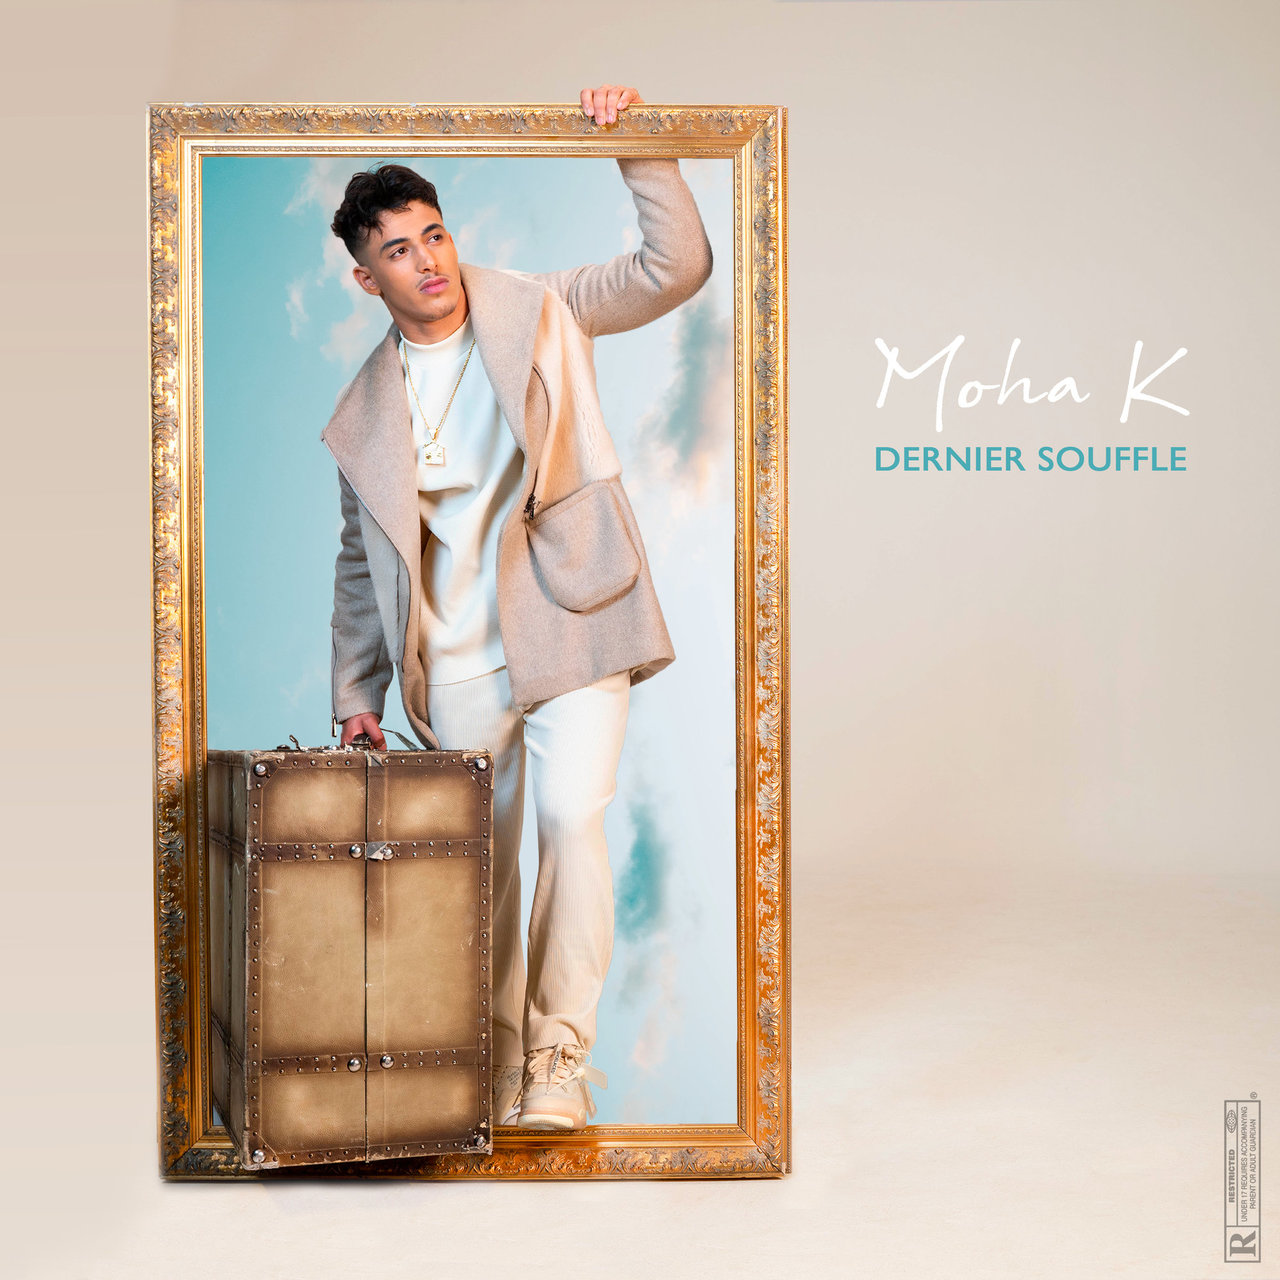 Moha K - Dernier Souffle (Cover)